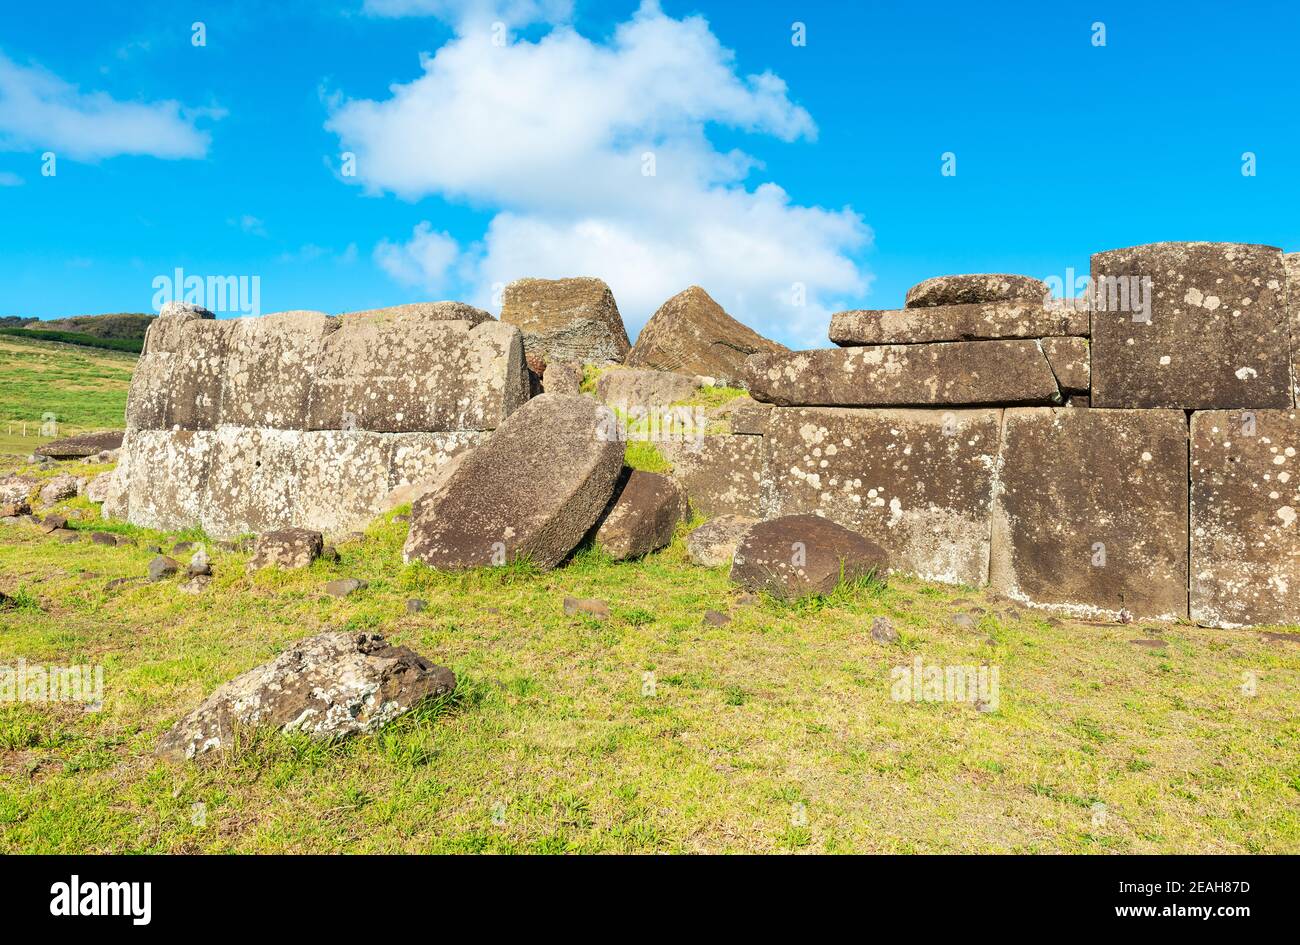 Ahu Vinapu platform with mysterious Inca Wall, Easter Island (Rapa Nui), Chile. Stock Photo